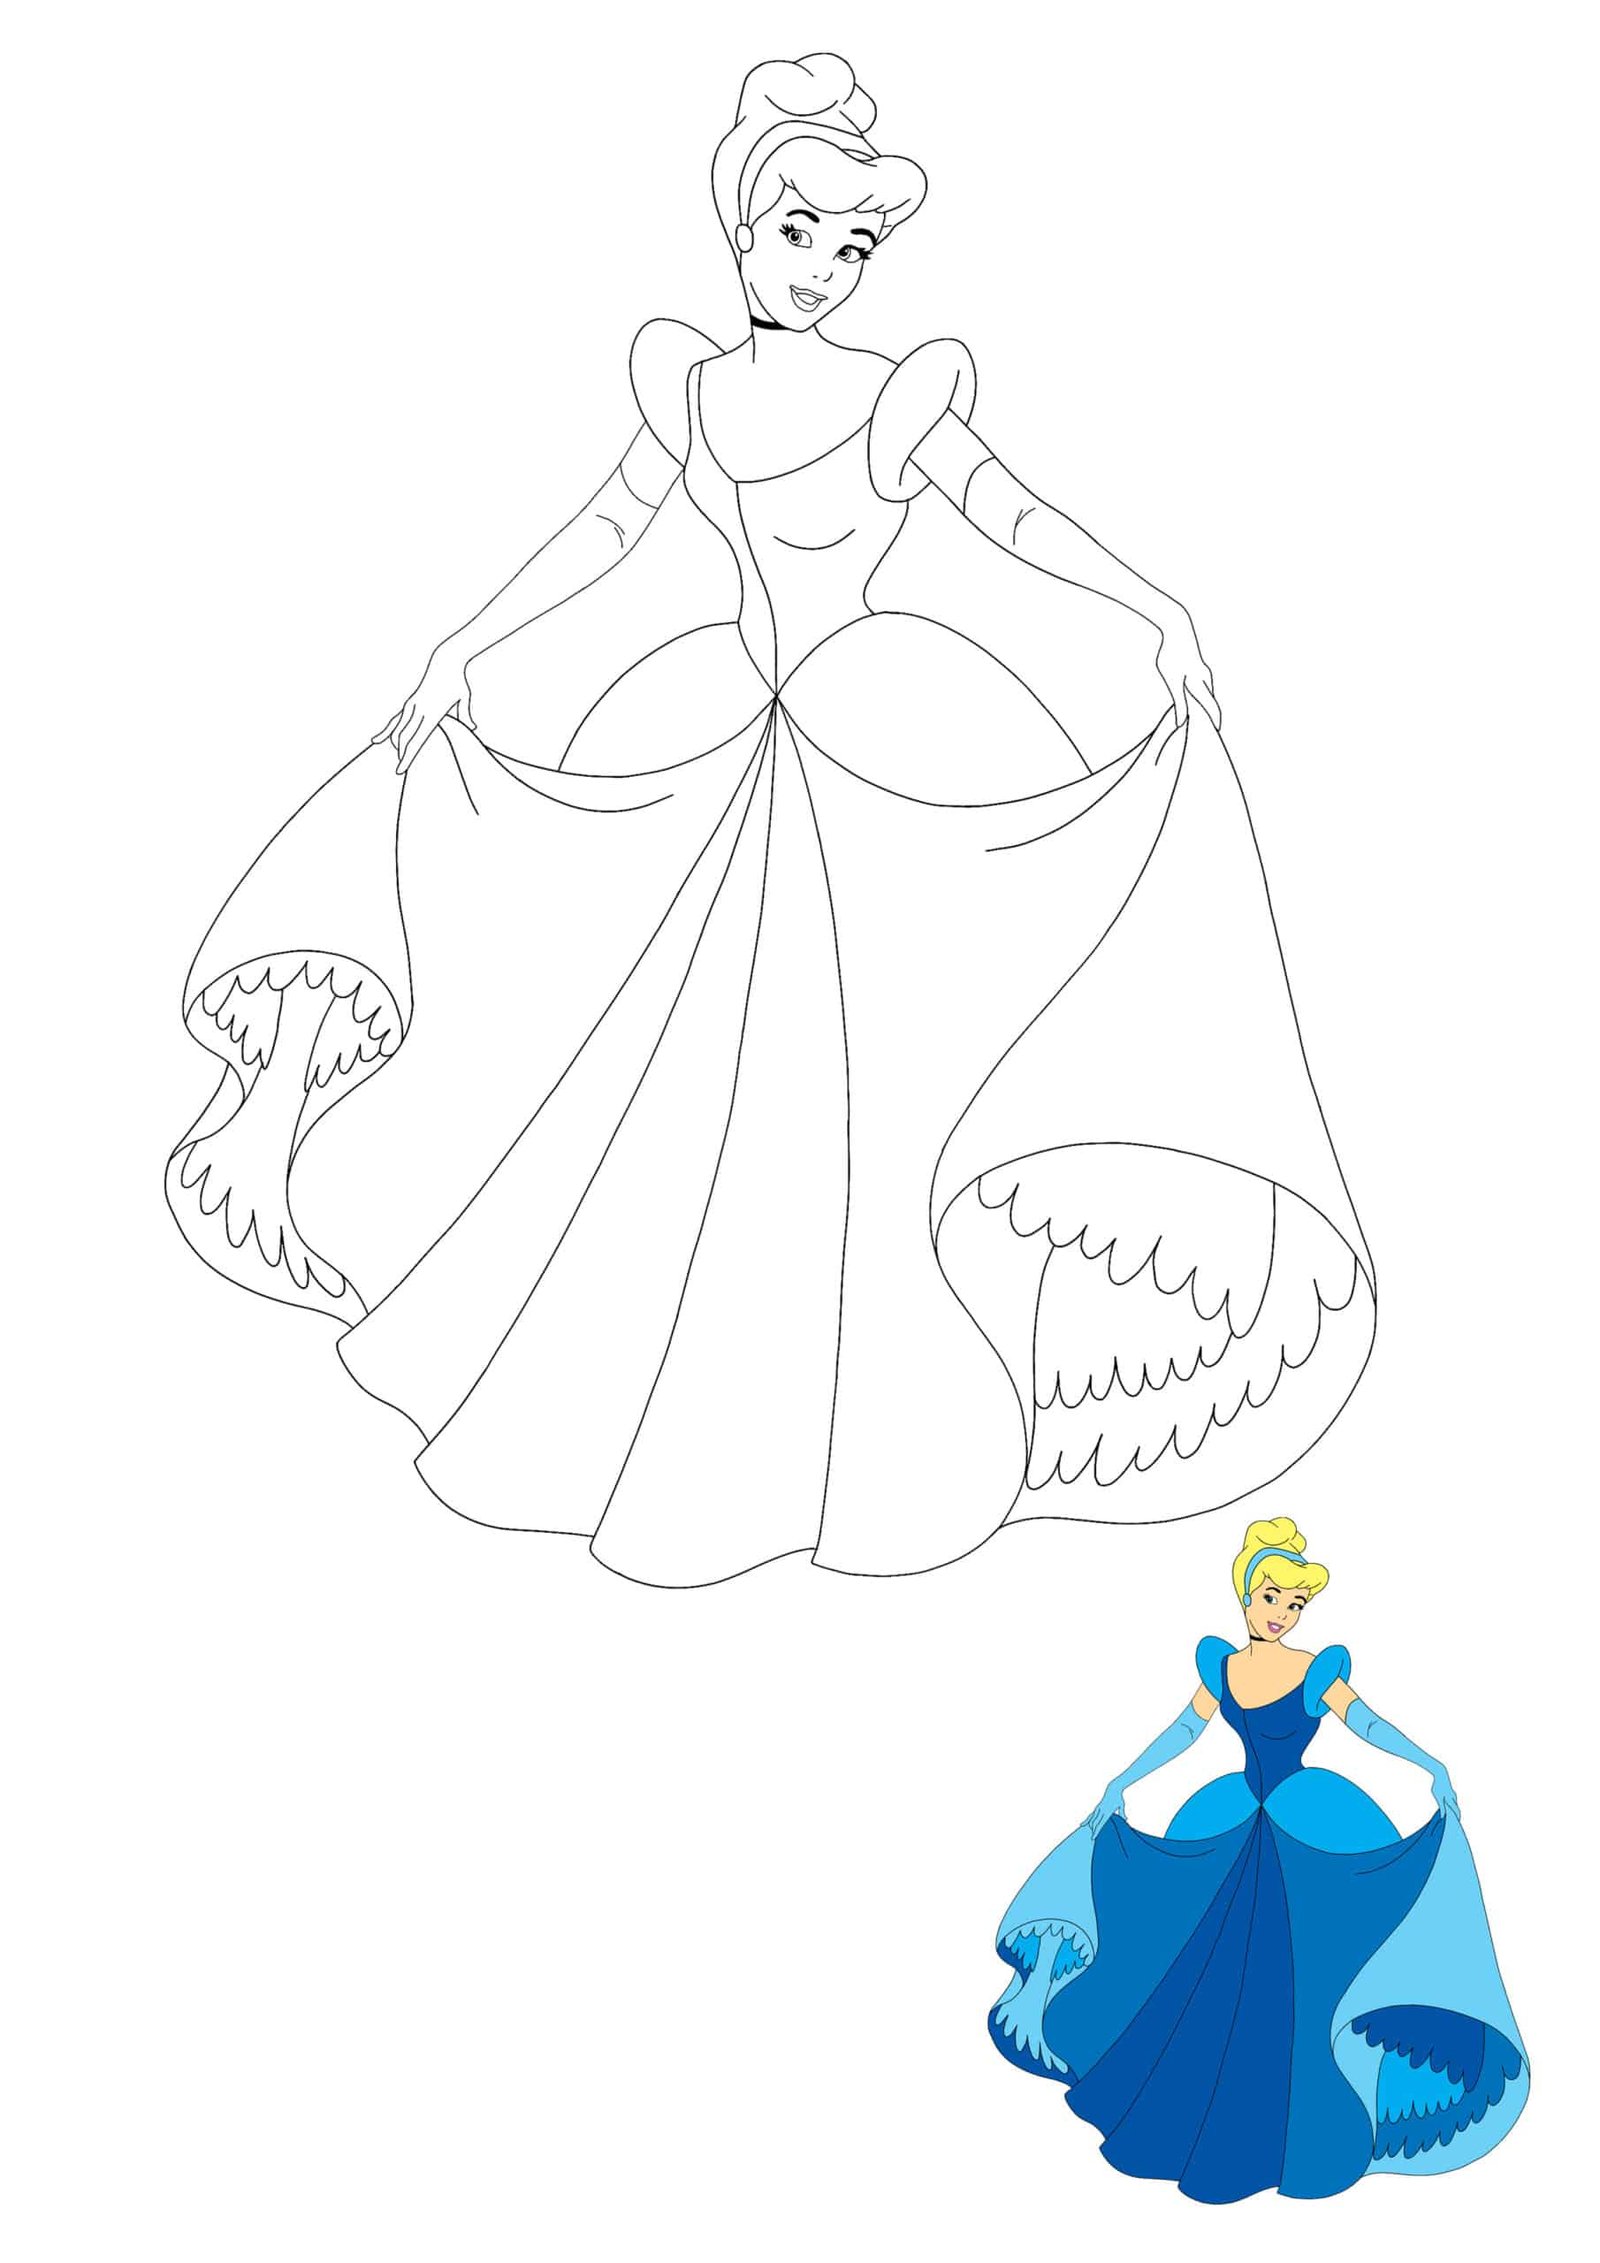 Disney Princess Cinderella coloring sheet